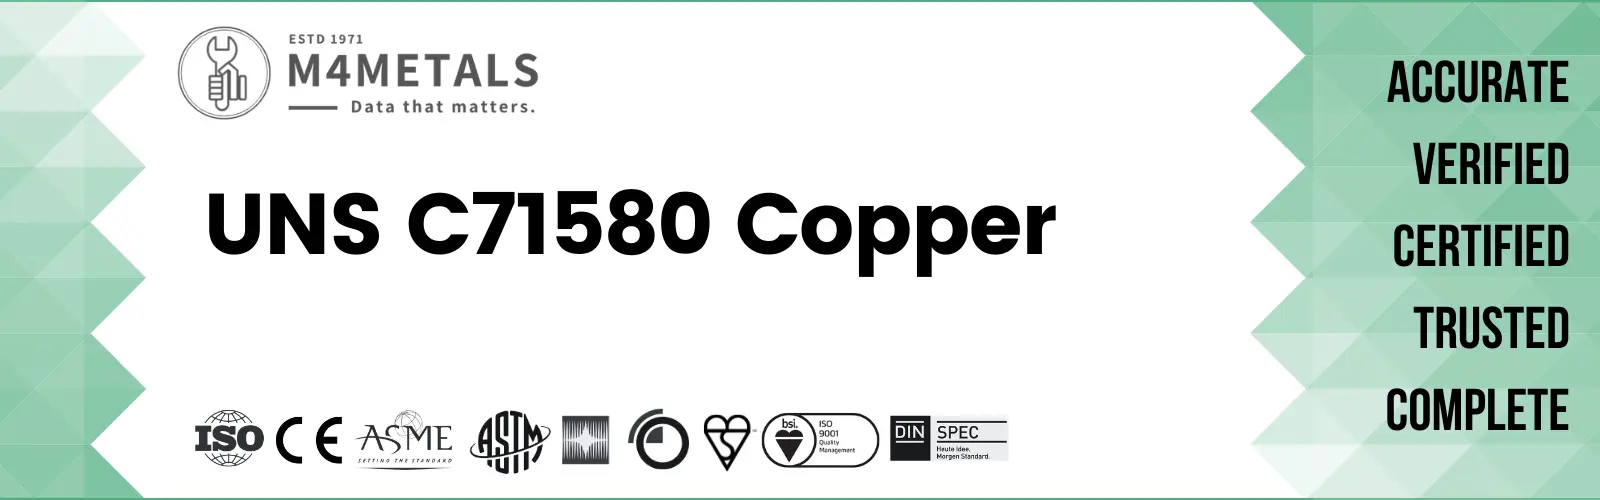 UNS C71580 Copper